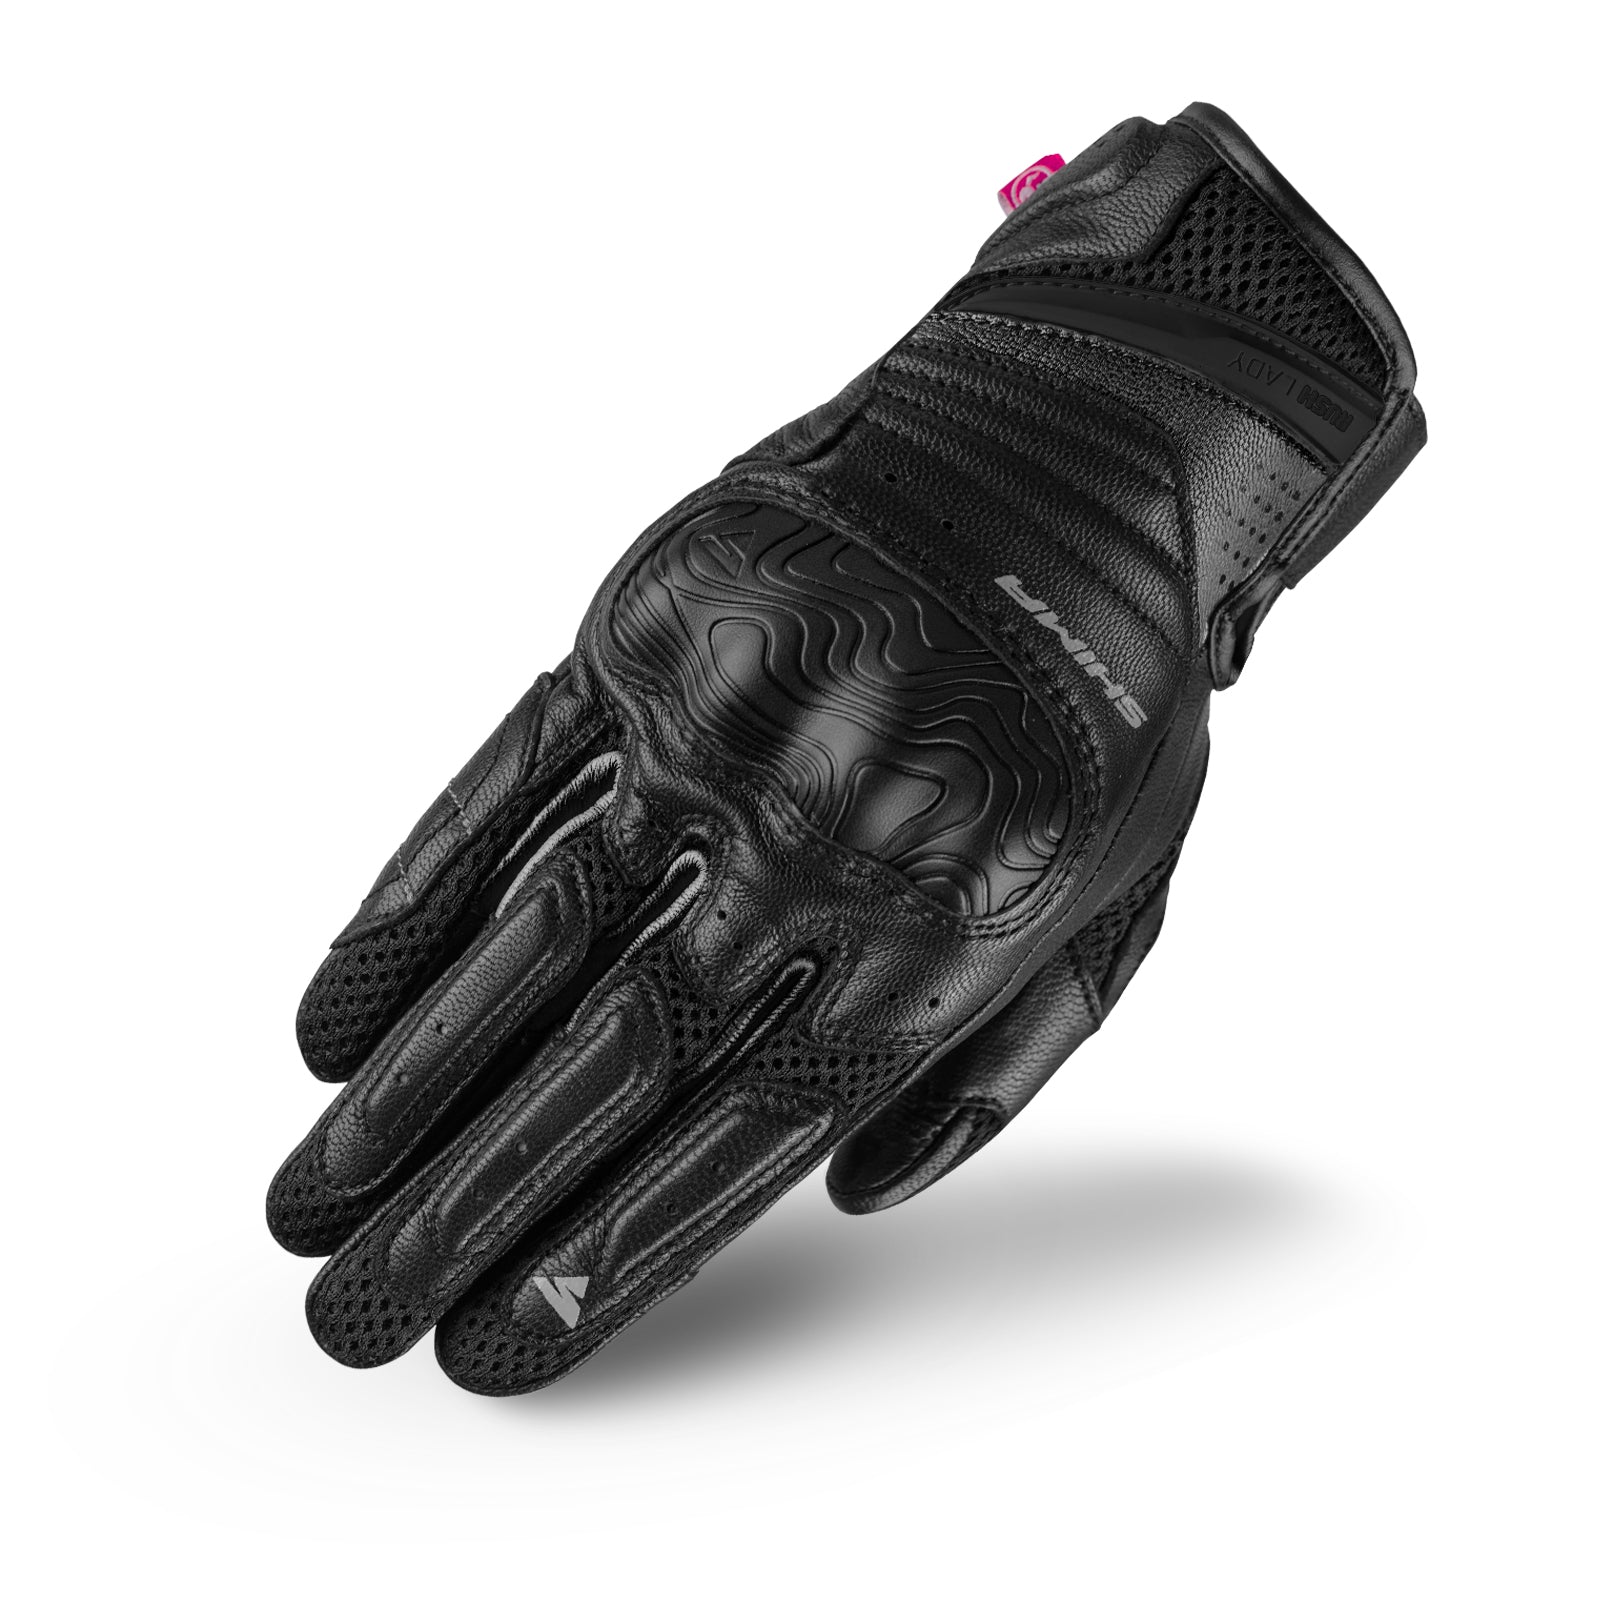 RUSH LADY Motorcycle Gloves - Black